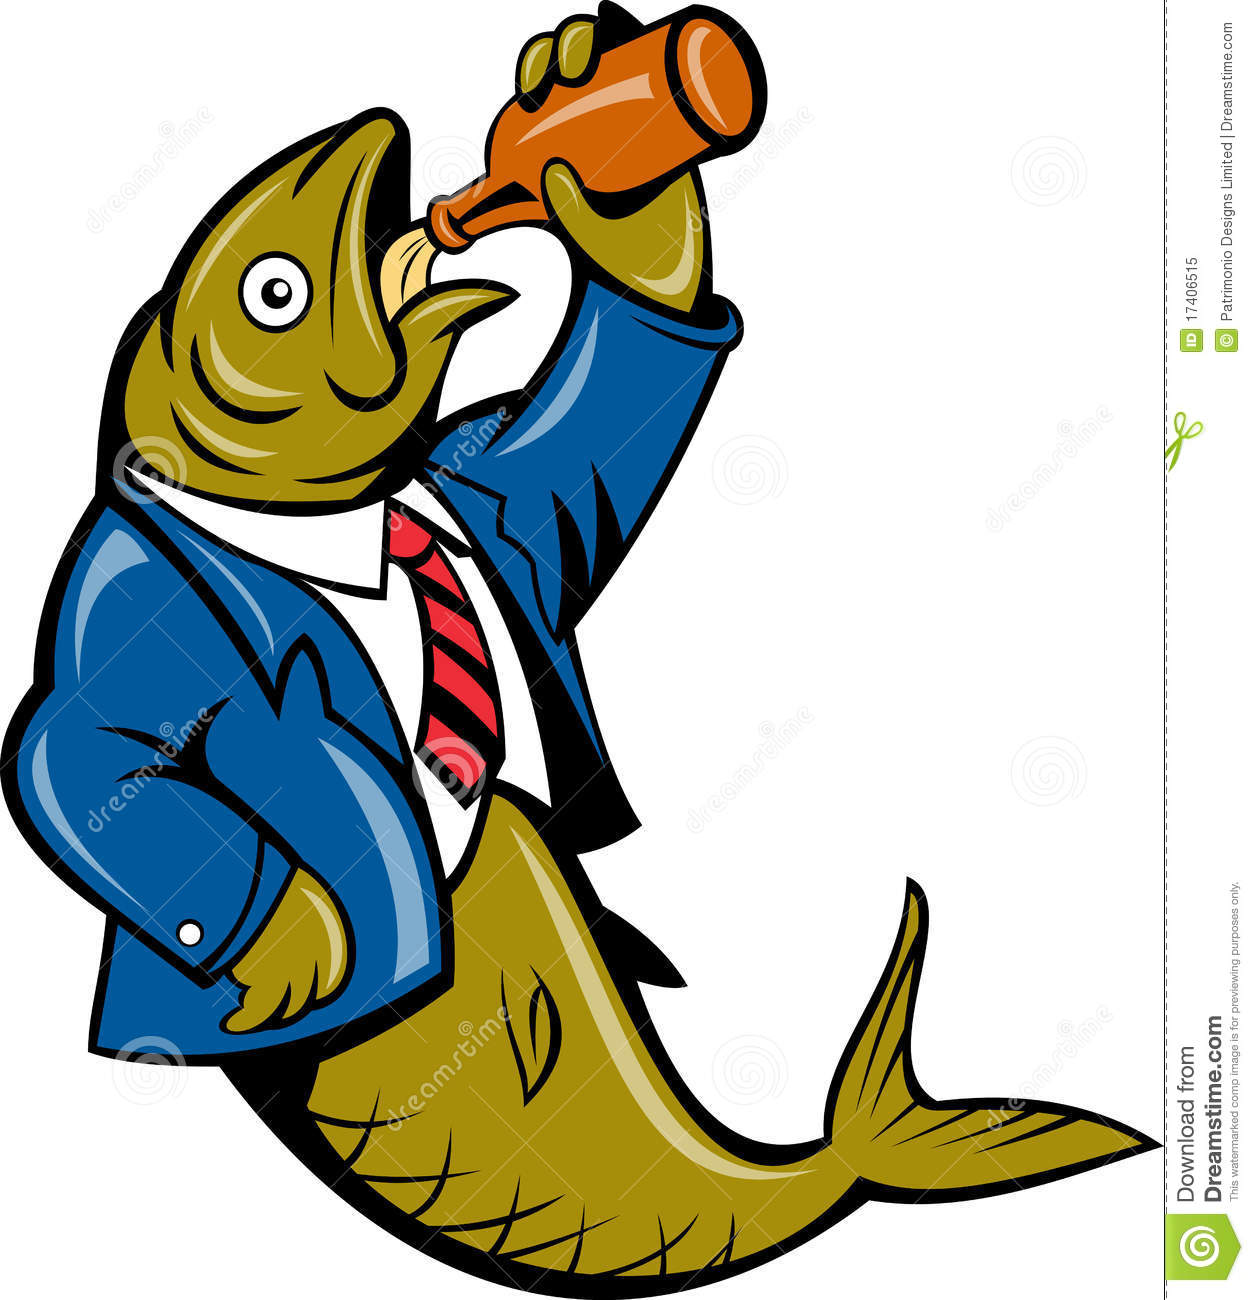 herring-fish-drinking-beer-bottle-17406515.jpg